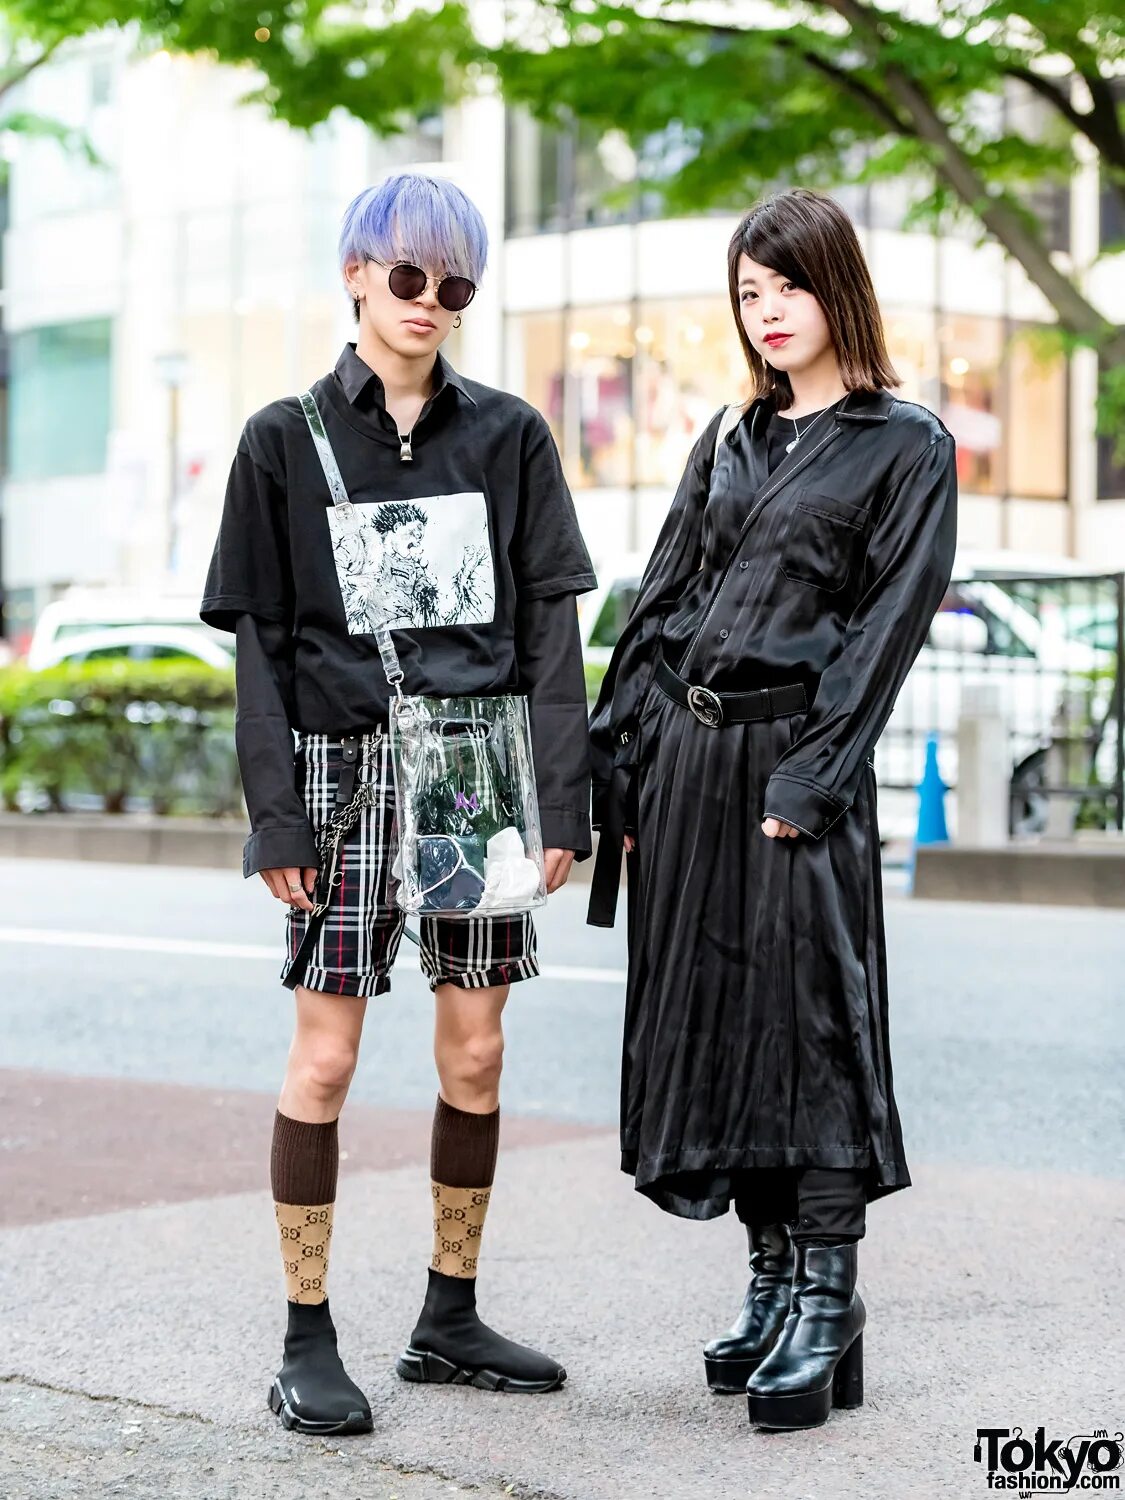 Токийские одежда. Streetwear стиль Япония. Сайт в стиле Нео Токио. Токио Street Fashion 2019. Японская Молодежная мода.